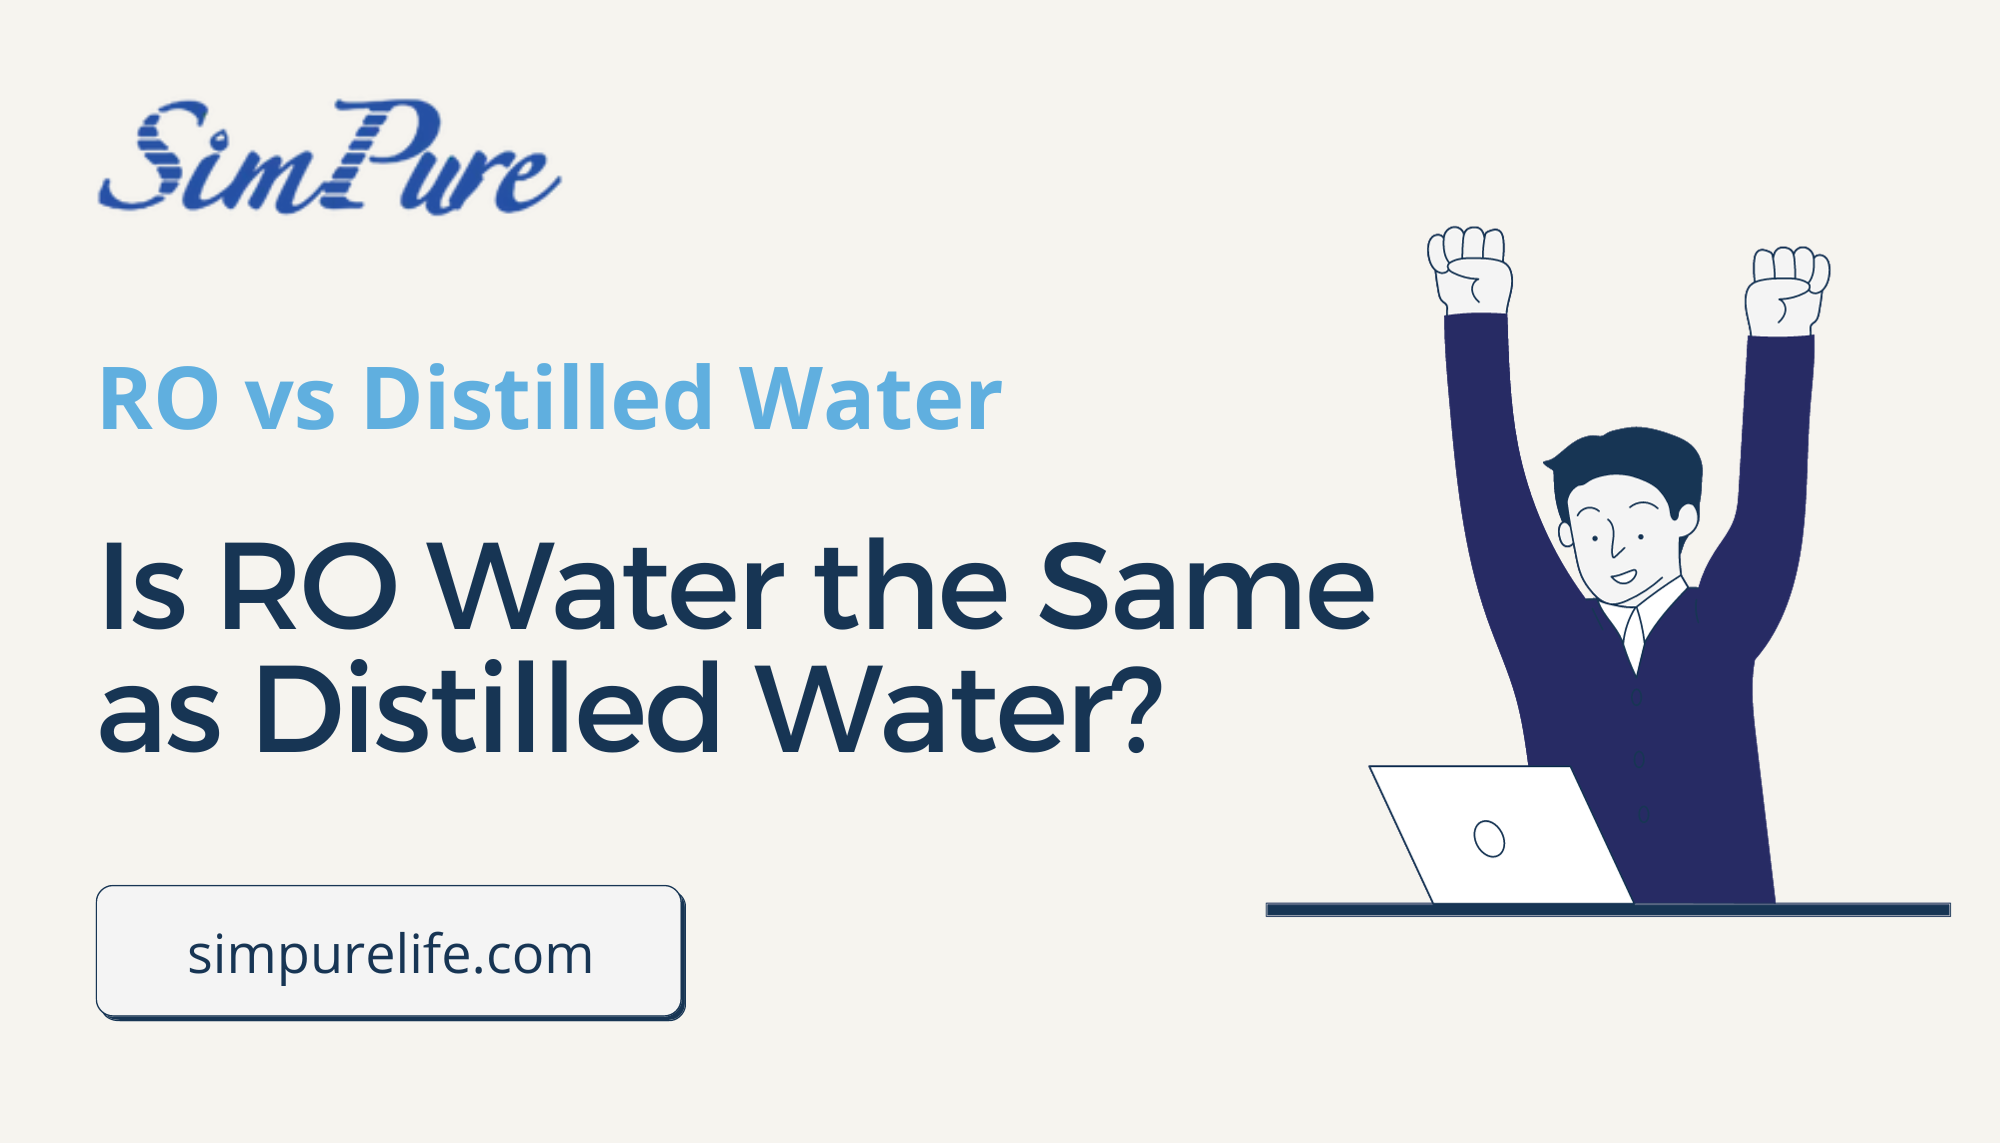 reverse osmosis vs distilled water